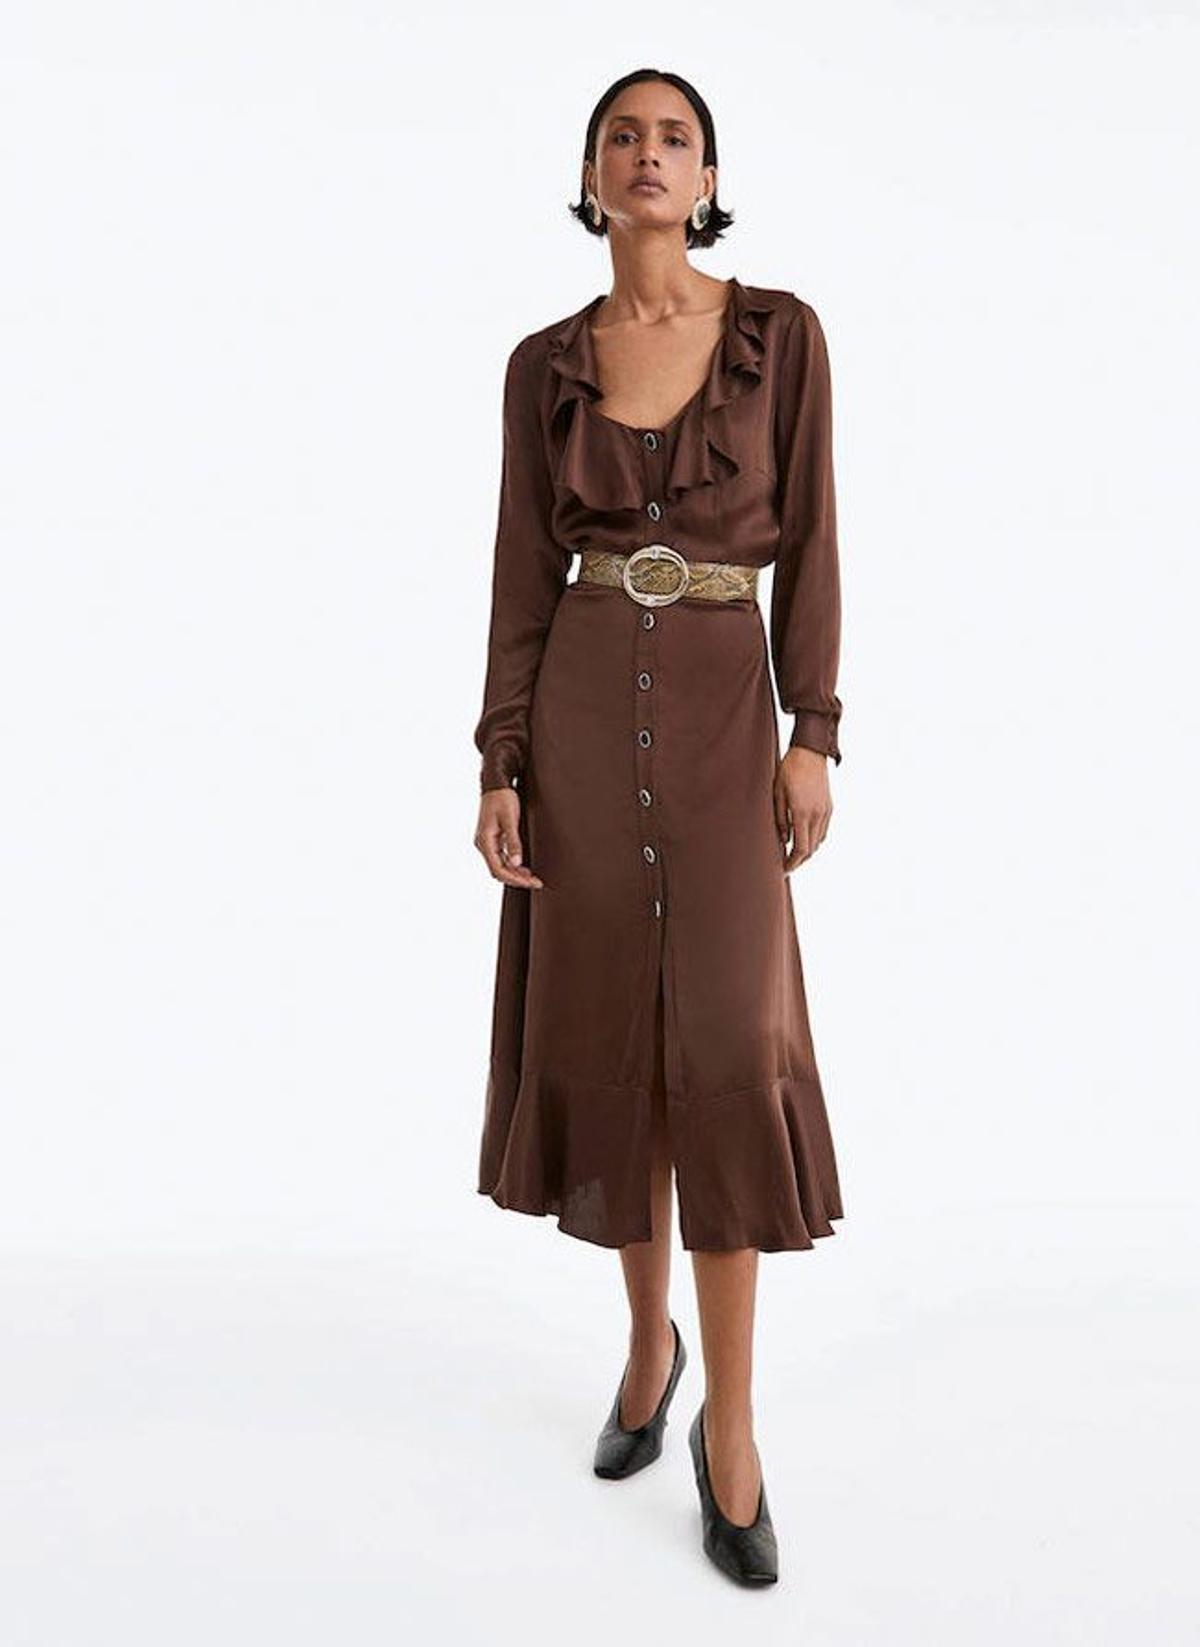 Vestido marrón con botones joya, de Uterqüe